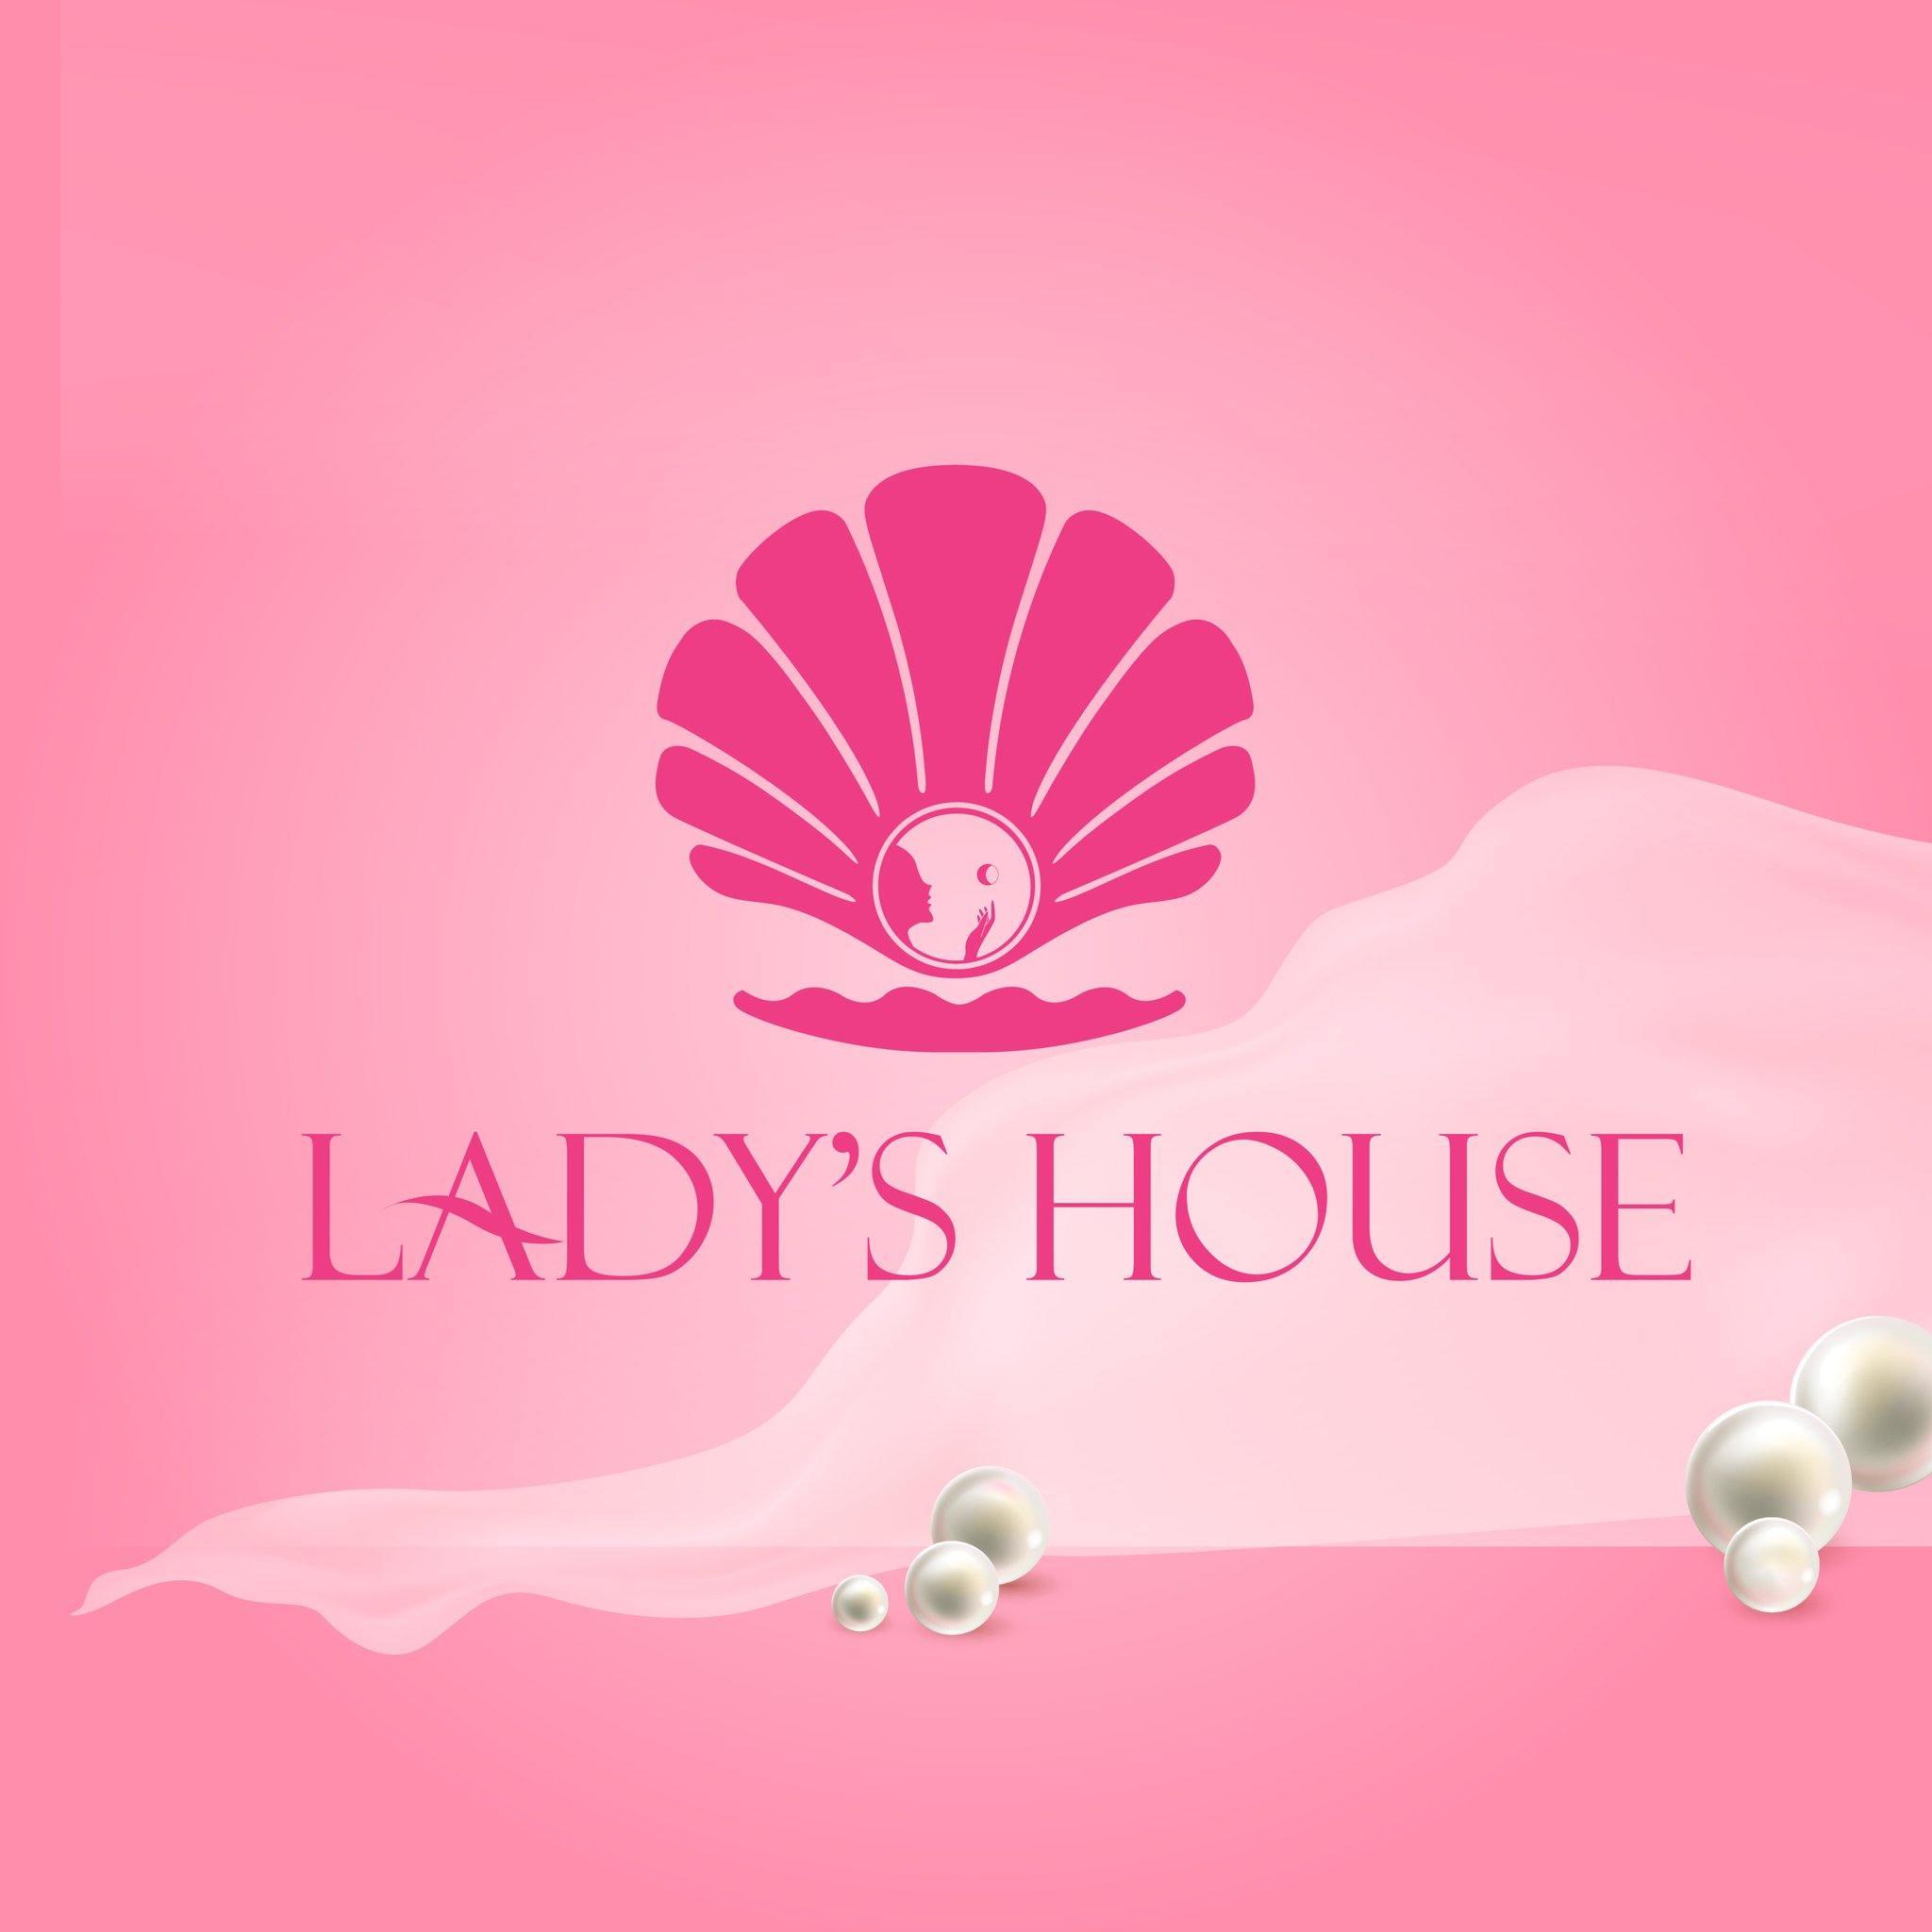 Lady's House - Spa